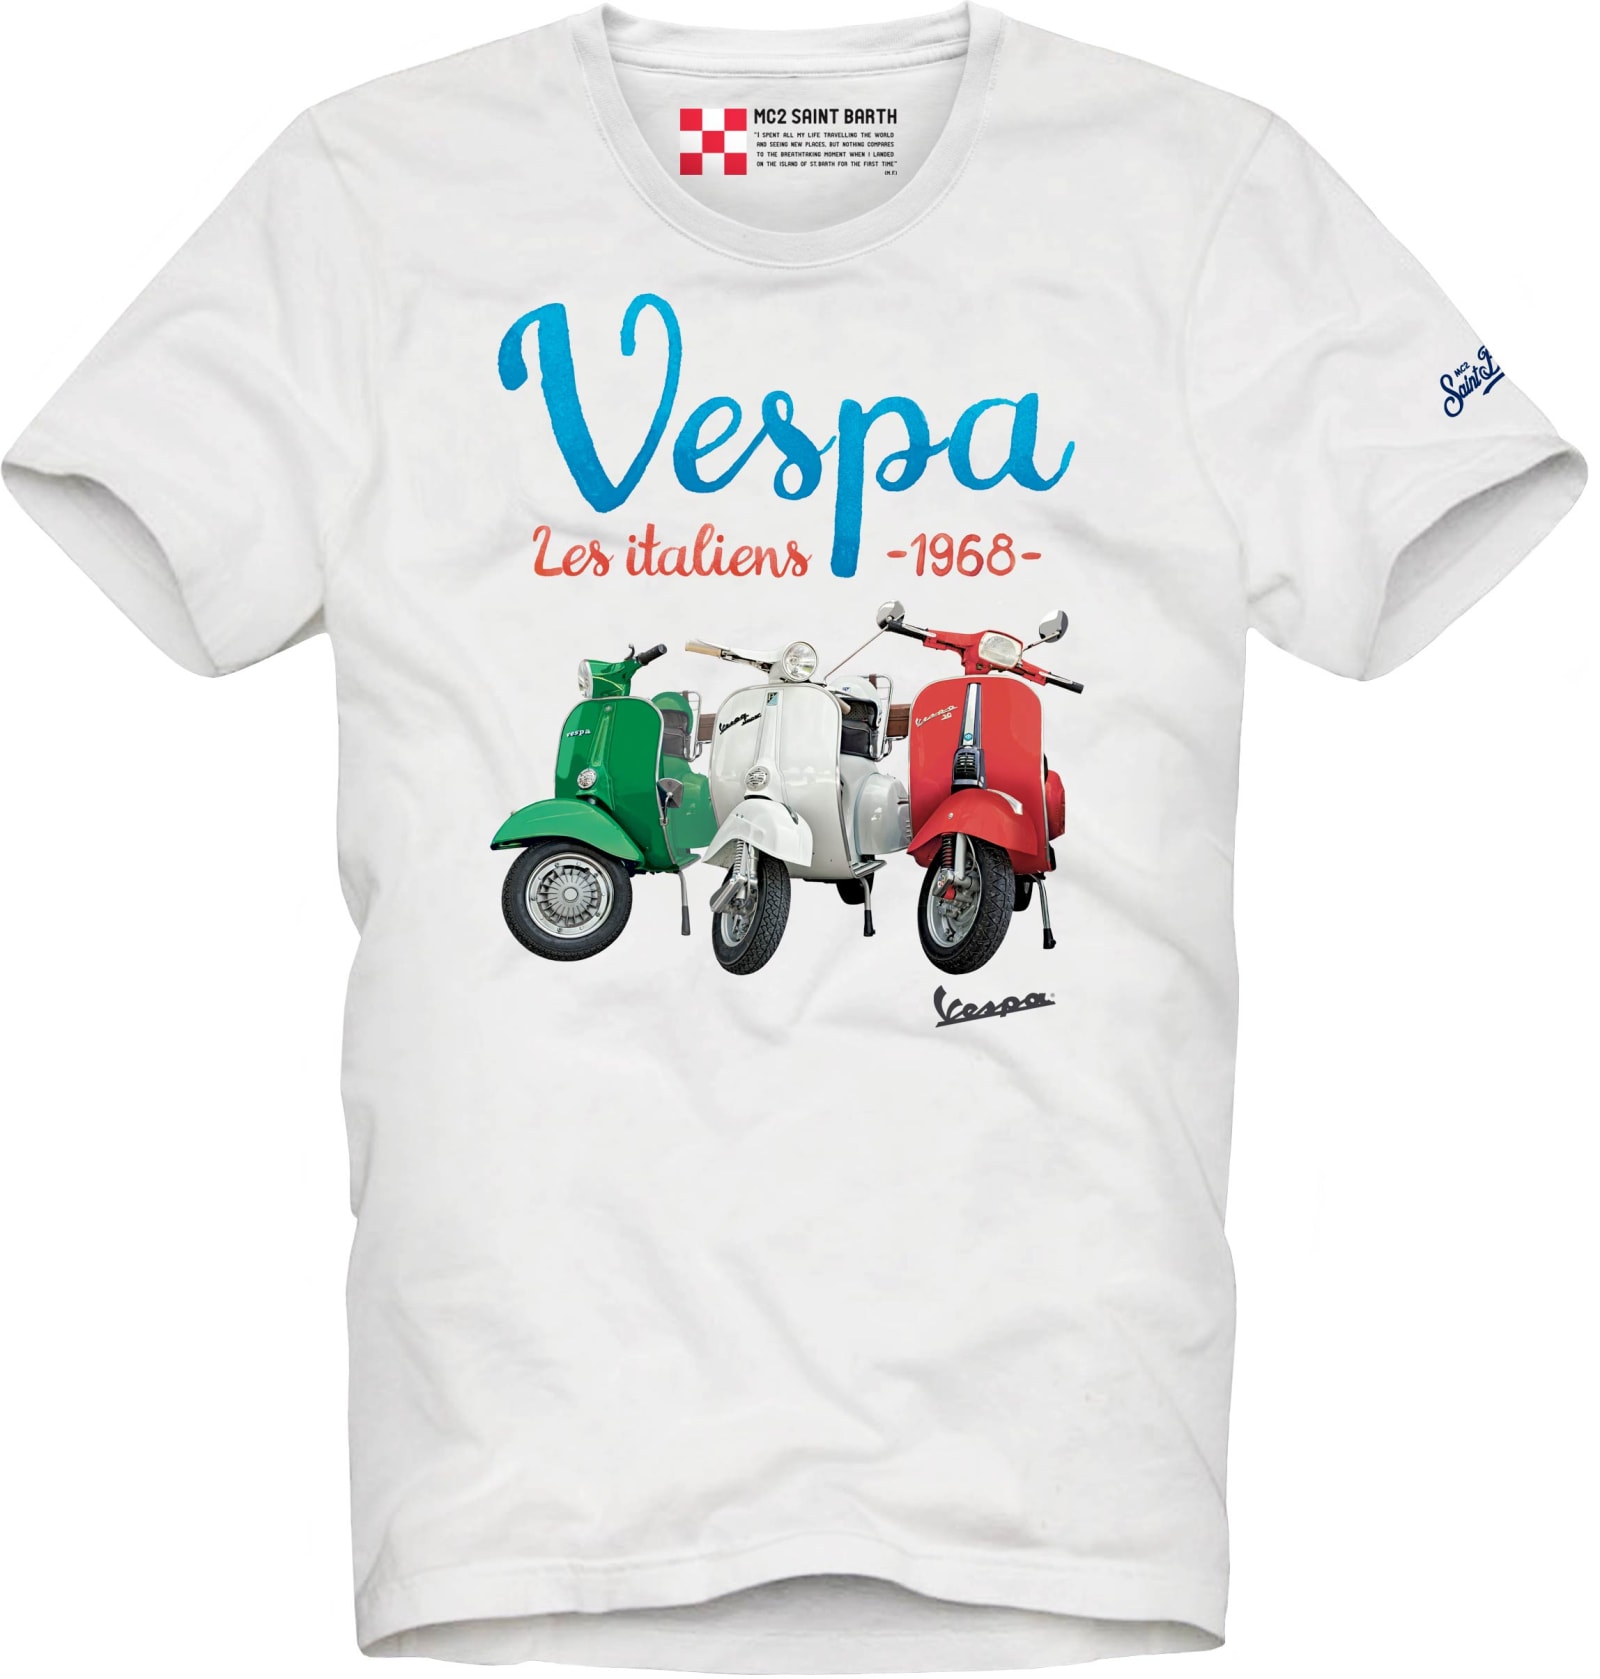 MC2 Saint Barth Vespa Les Italianes Printed White T-shirt - Vespa Special Edition ®